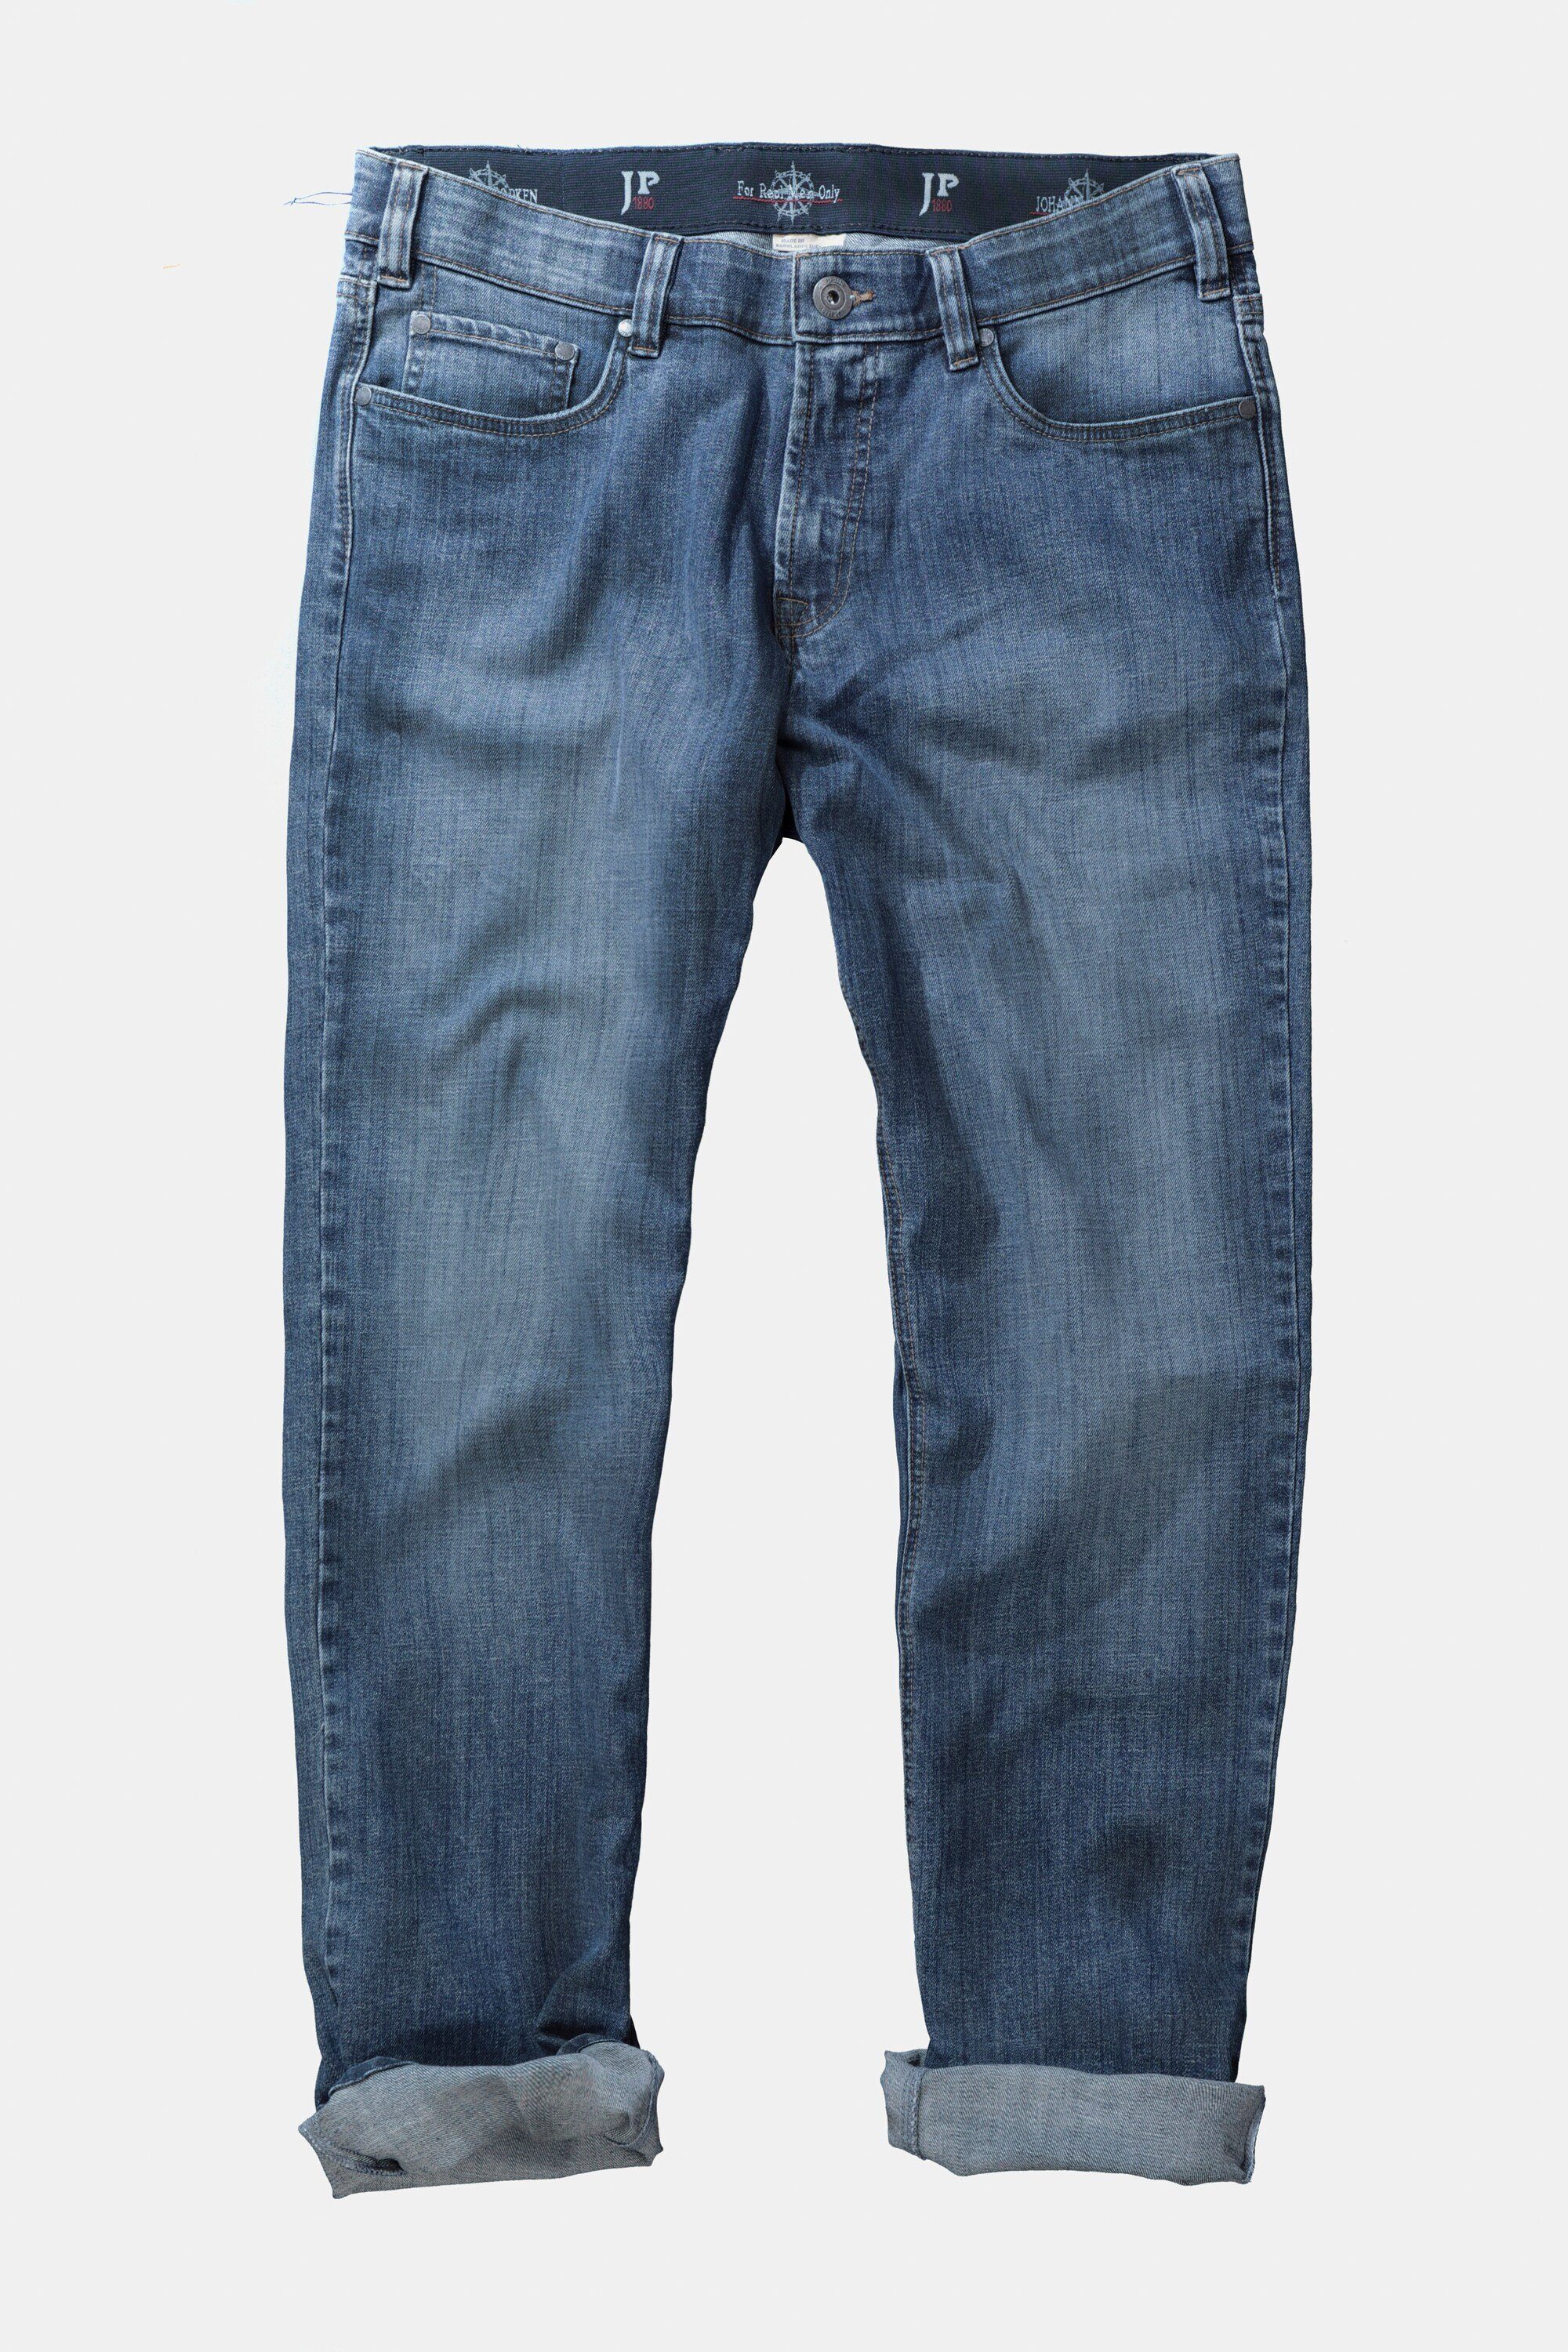 denim Komfortbund 5-Pocket Jeans elastischer Fit Cargohose blue JP1880 Regular